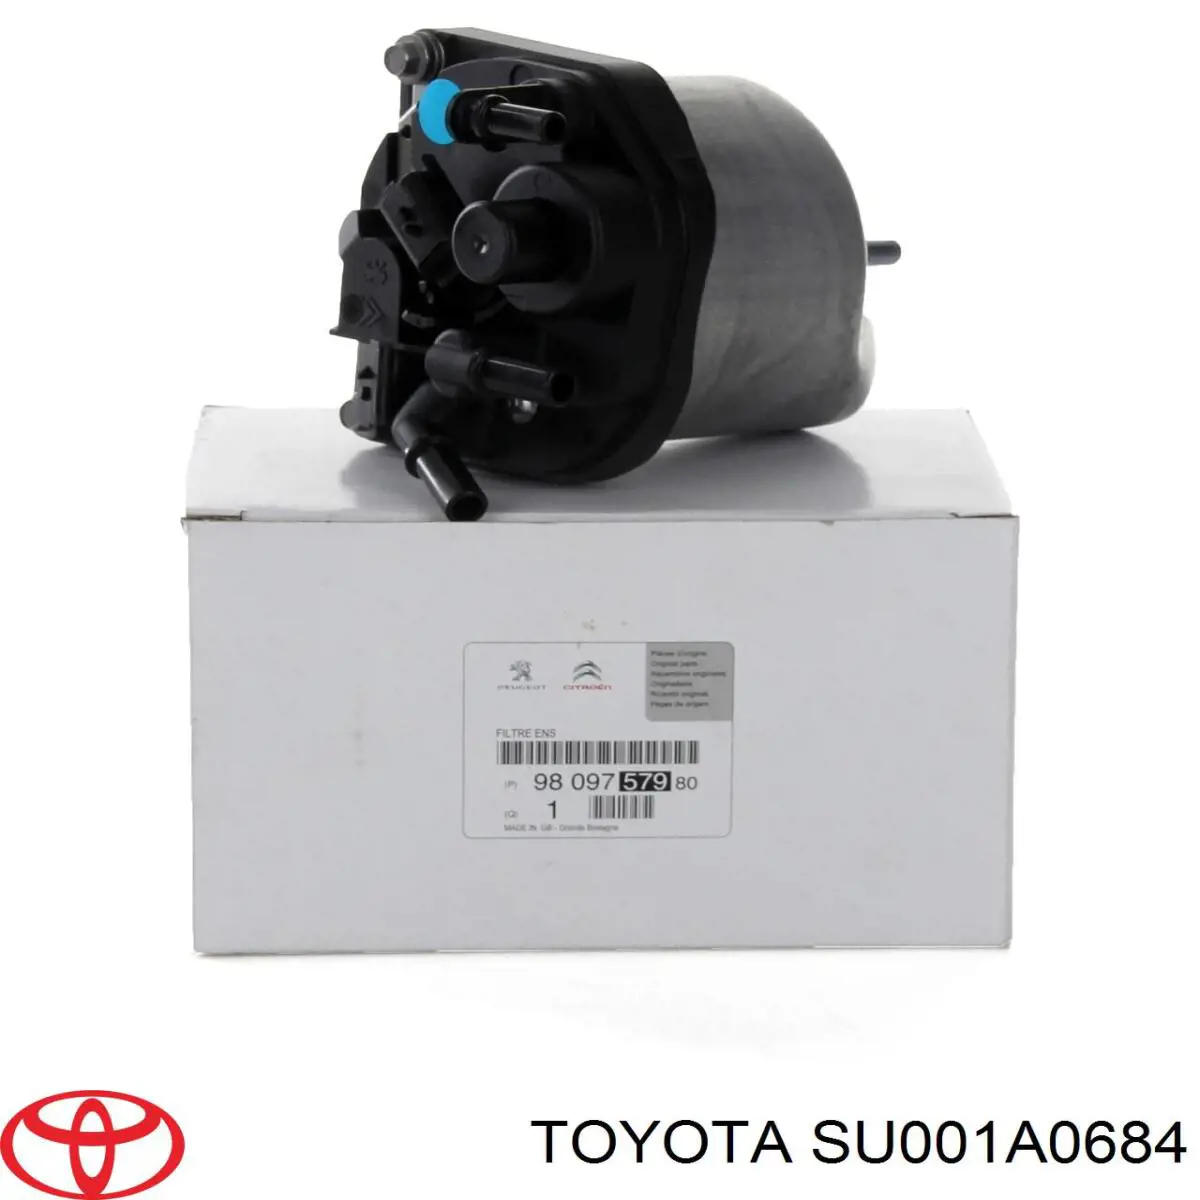 SU001A0684 Toyota filtro combustible